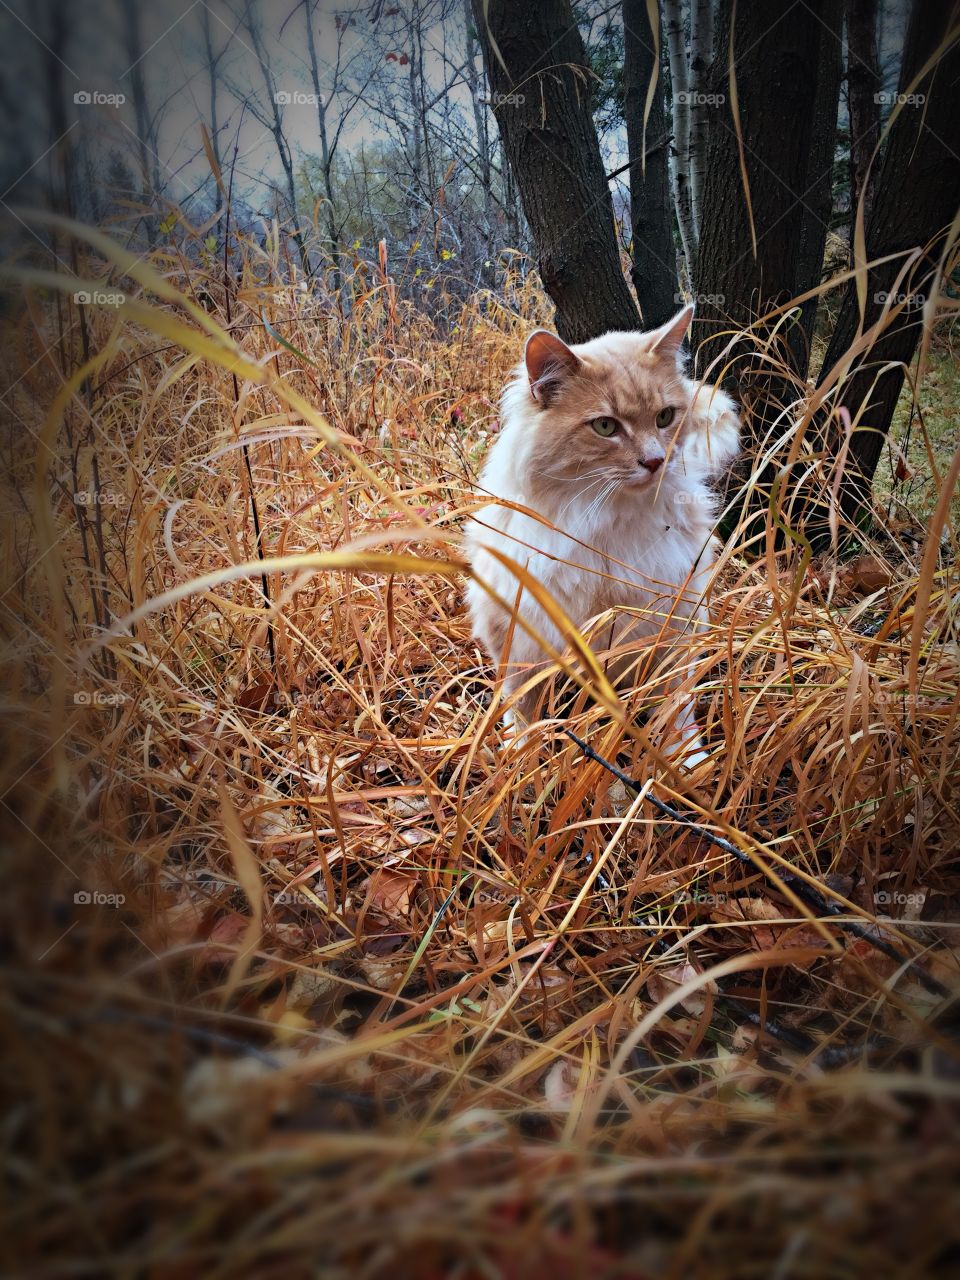 An orange cat in the grass